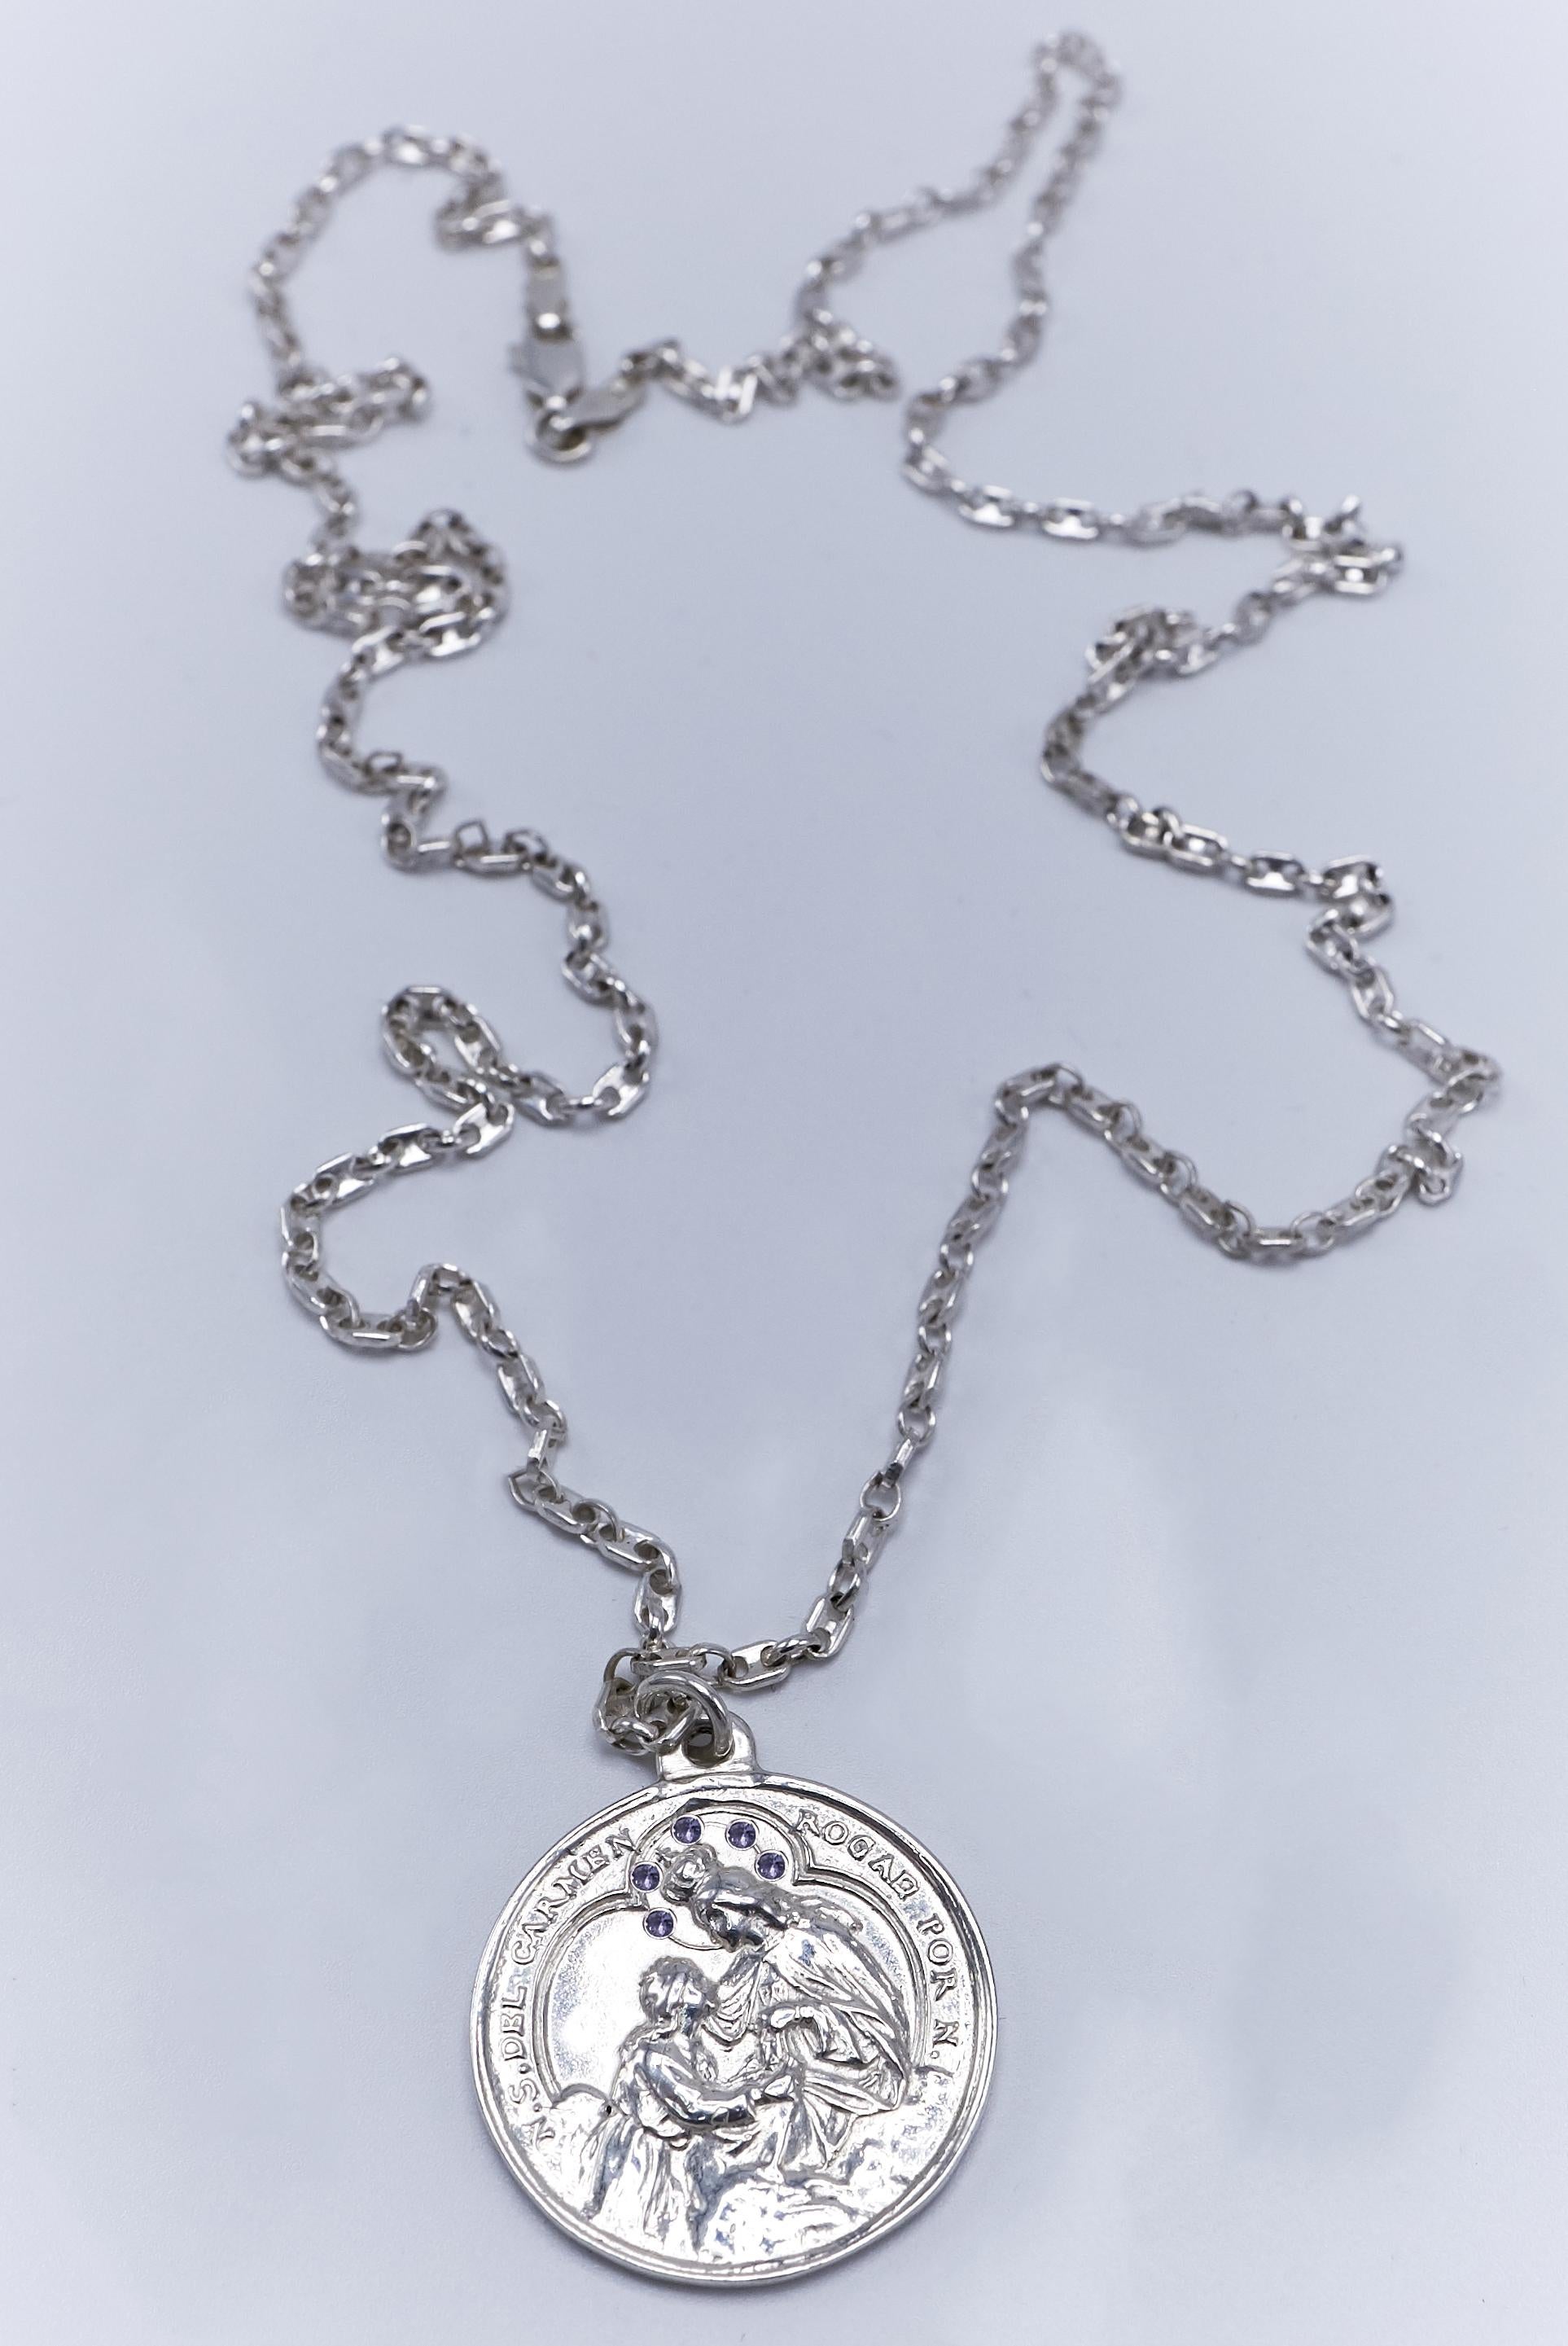 5 Stück Iolith Medaille Kette Halskette Wundertätige Jungfrau Maria Silber J DAUPHIN

J DAUPHIN Halskette 